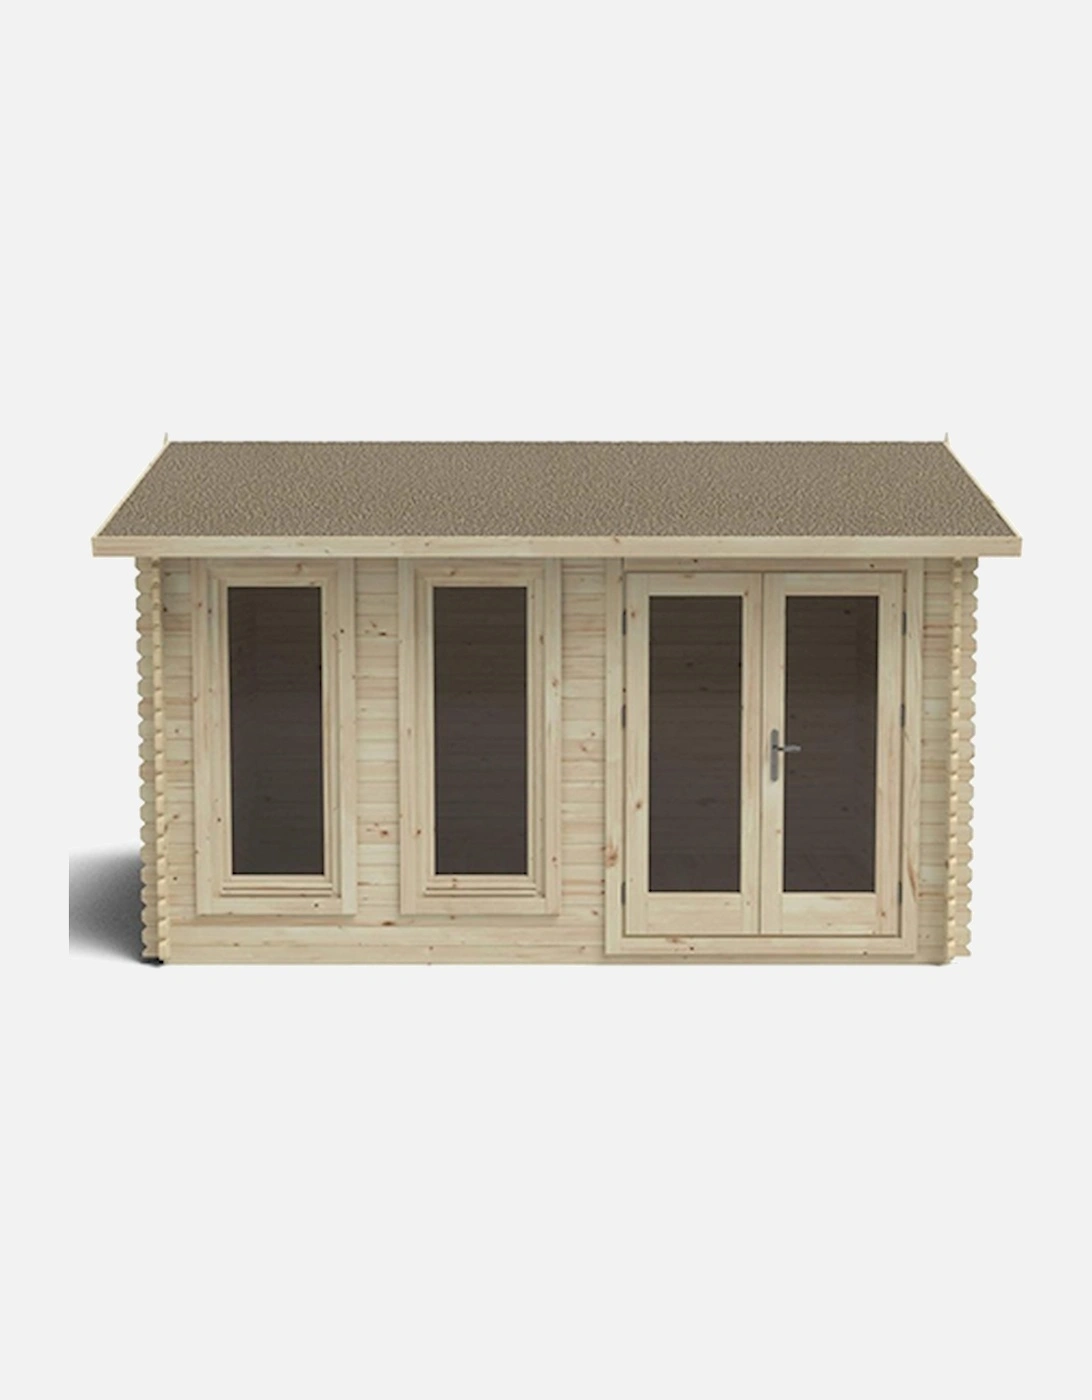 Garden Chiltern 4.0m x 3.0m Log Cabin - Apex Roof Single Glazed 24kg Felt Without Underlay